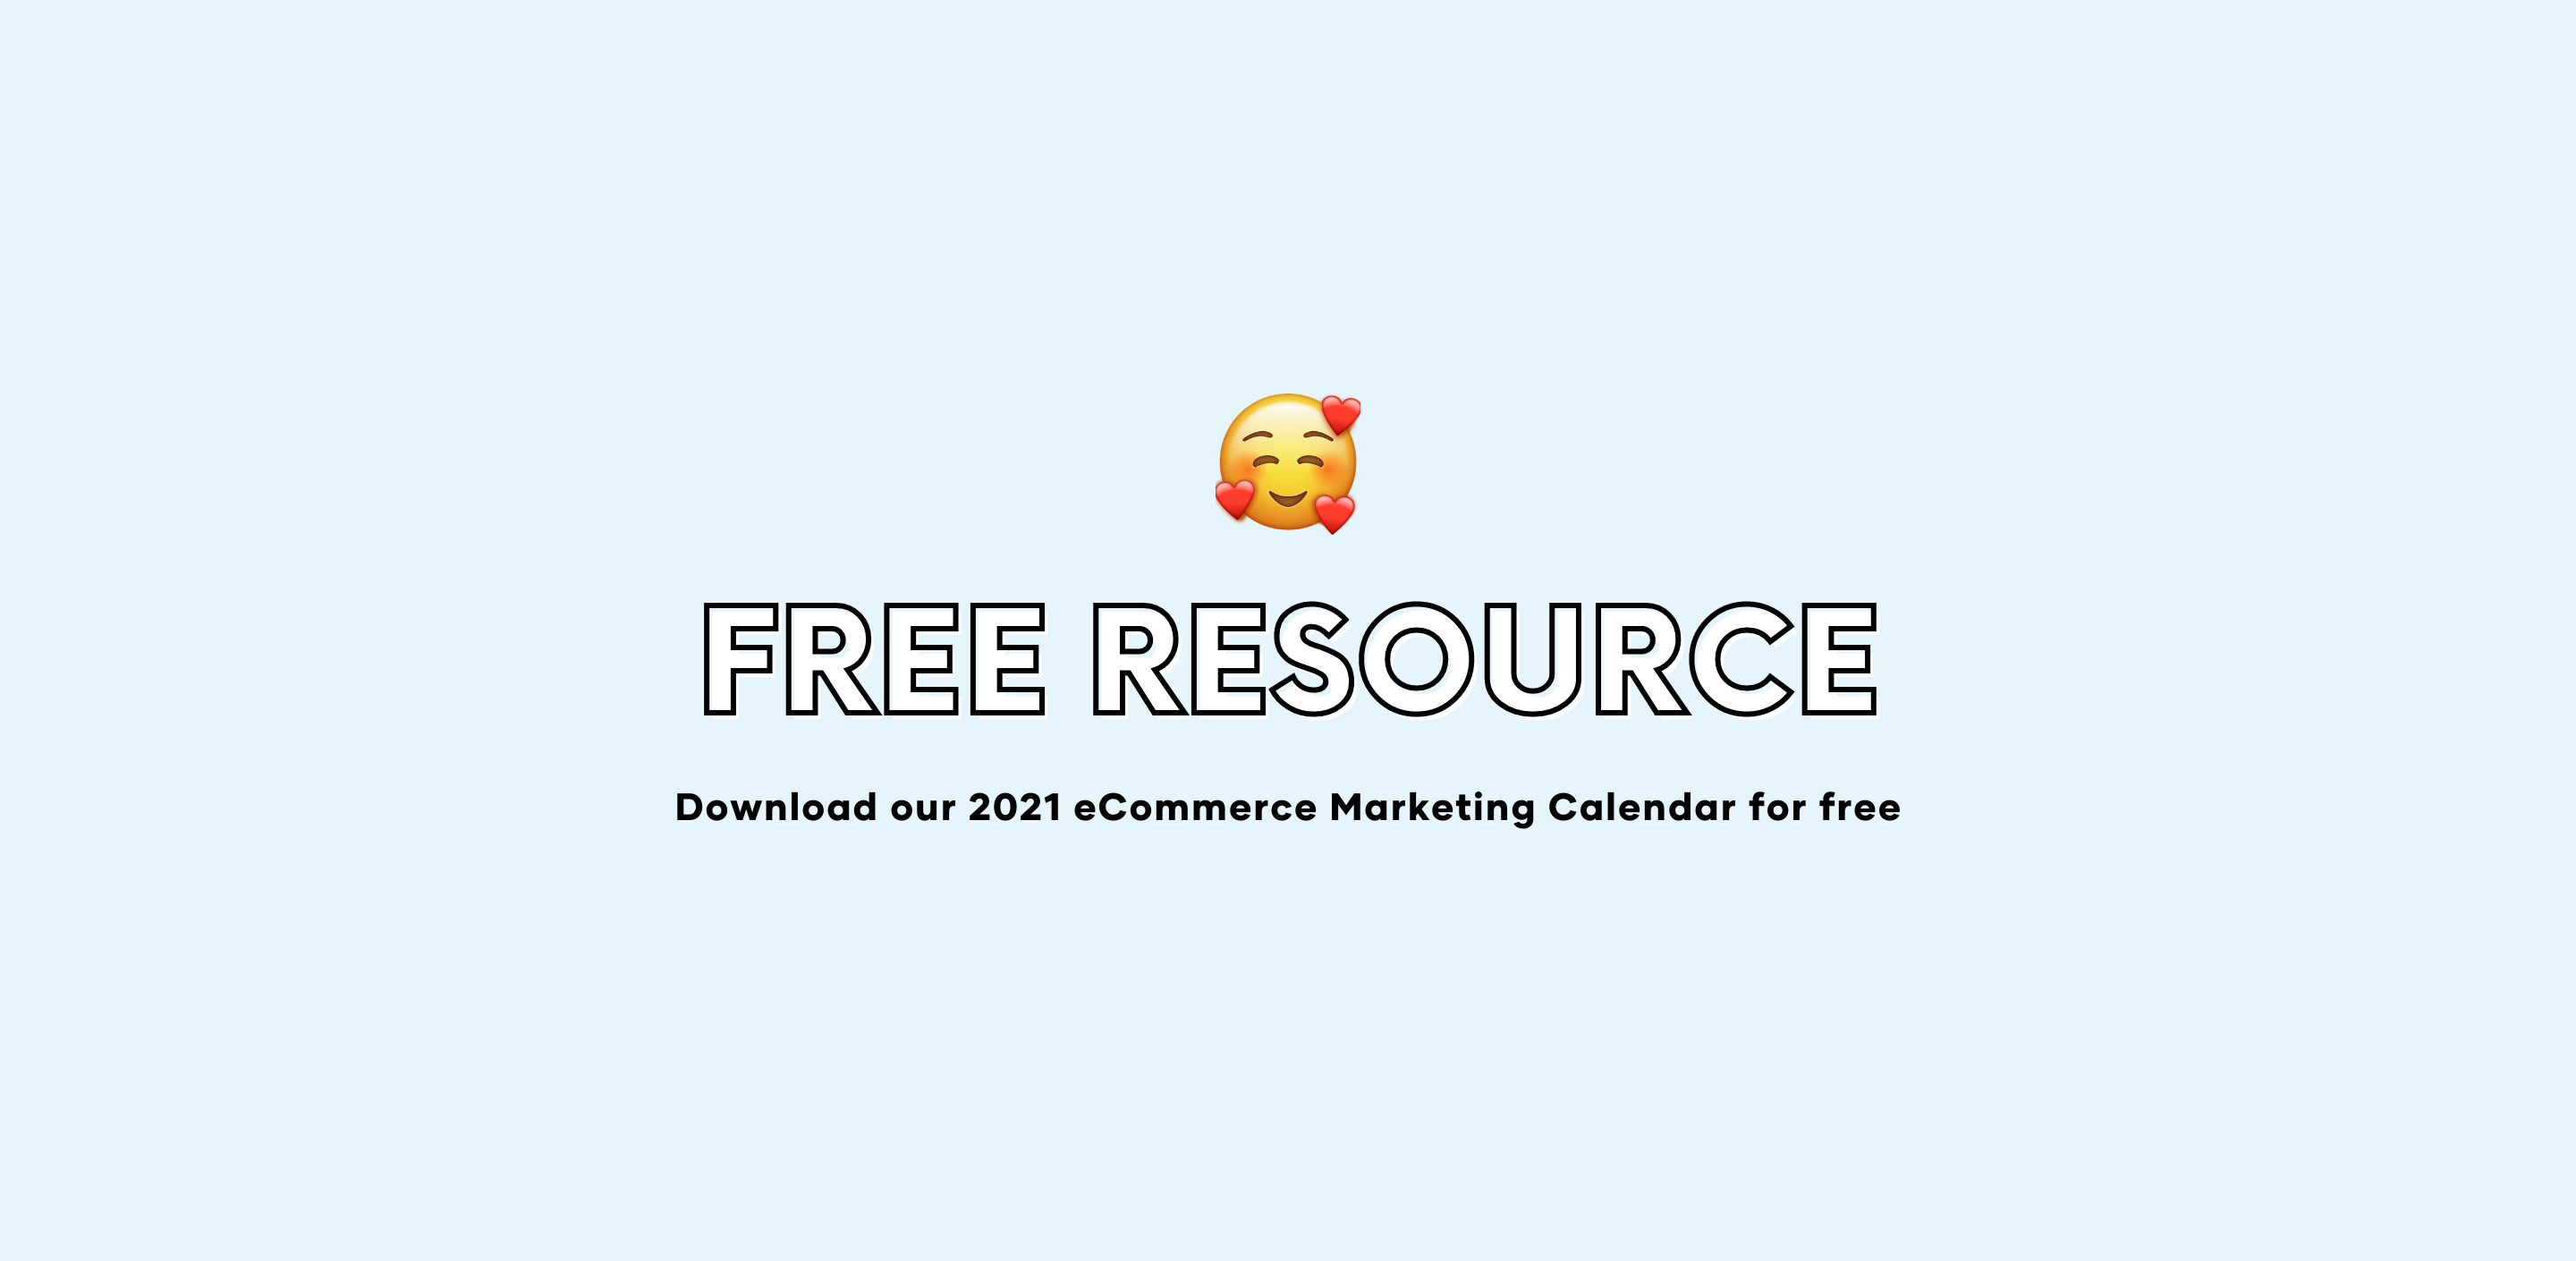 FREE RESOURCE: 2021 eCommerce Marketing Calendar